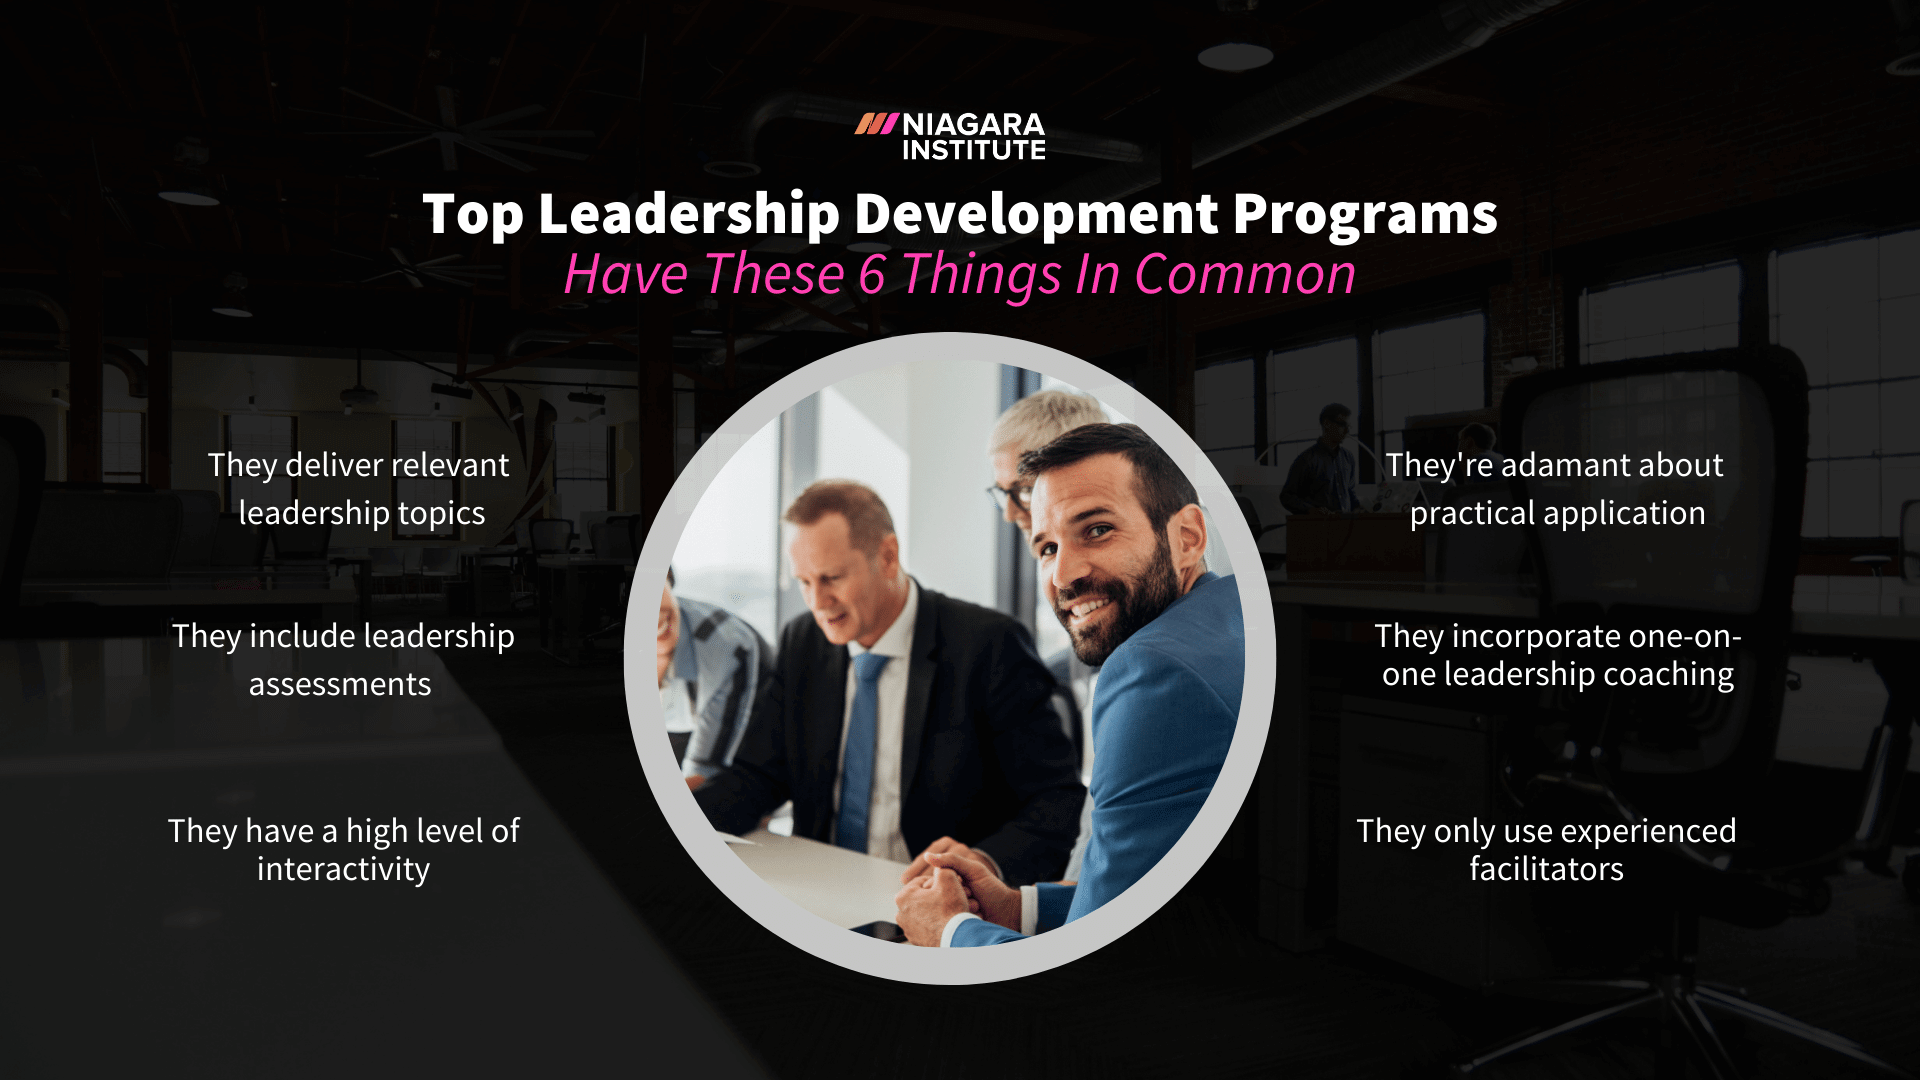 Top Leadership Development Programs - Niagara Institute (1)